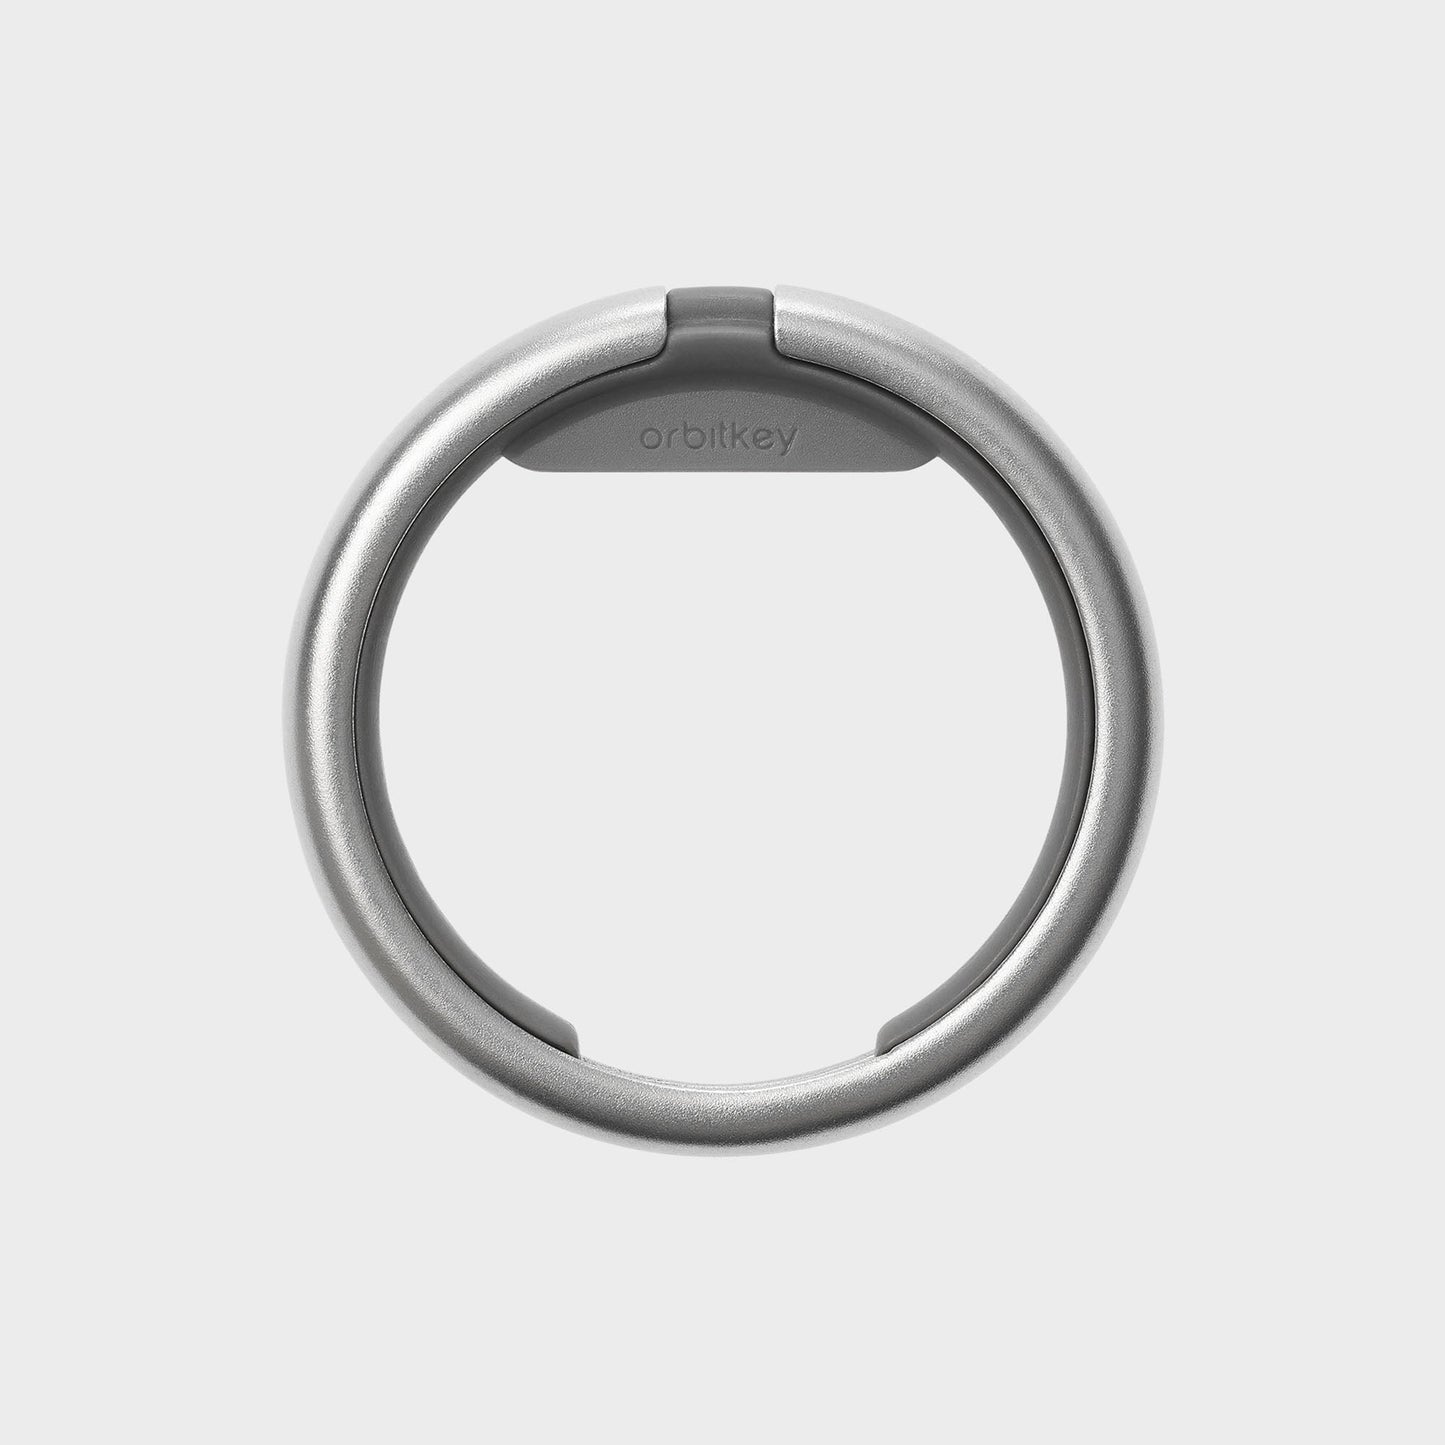 Orbitkey Quick Release Key Ring v2 – Seattle Thread Company